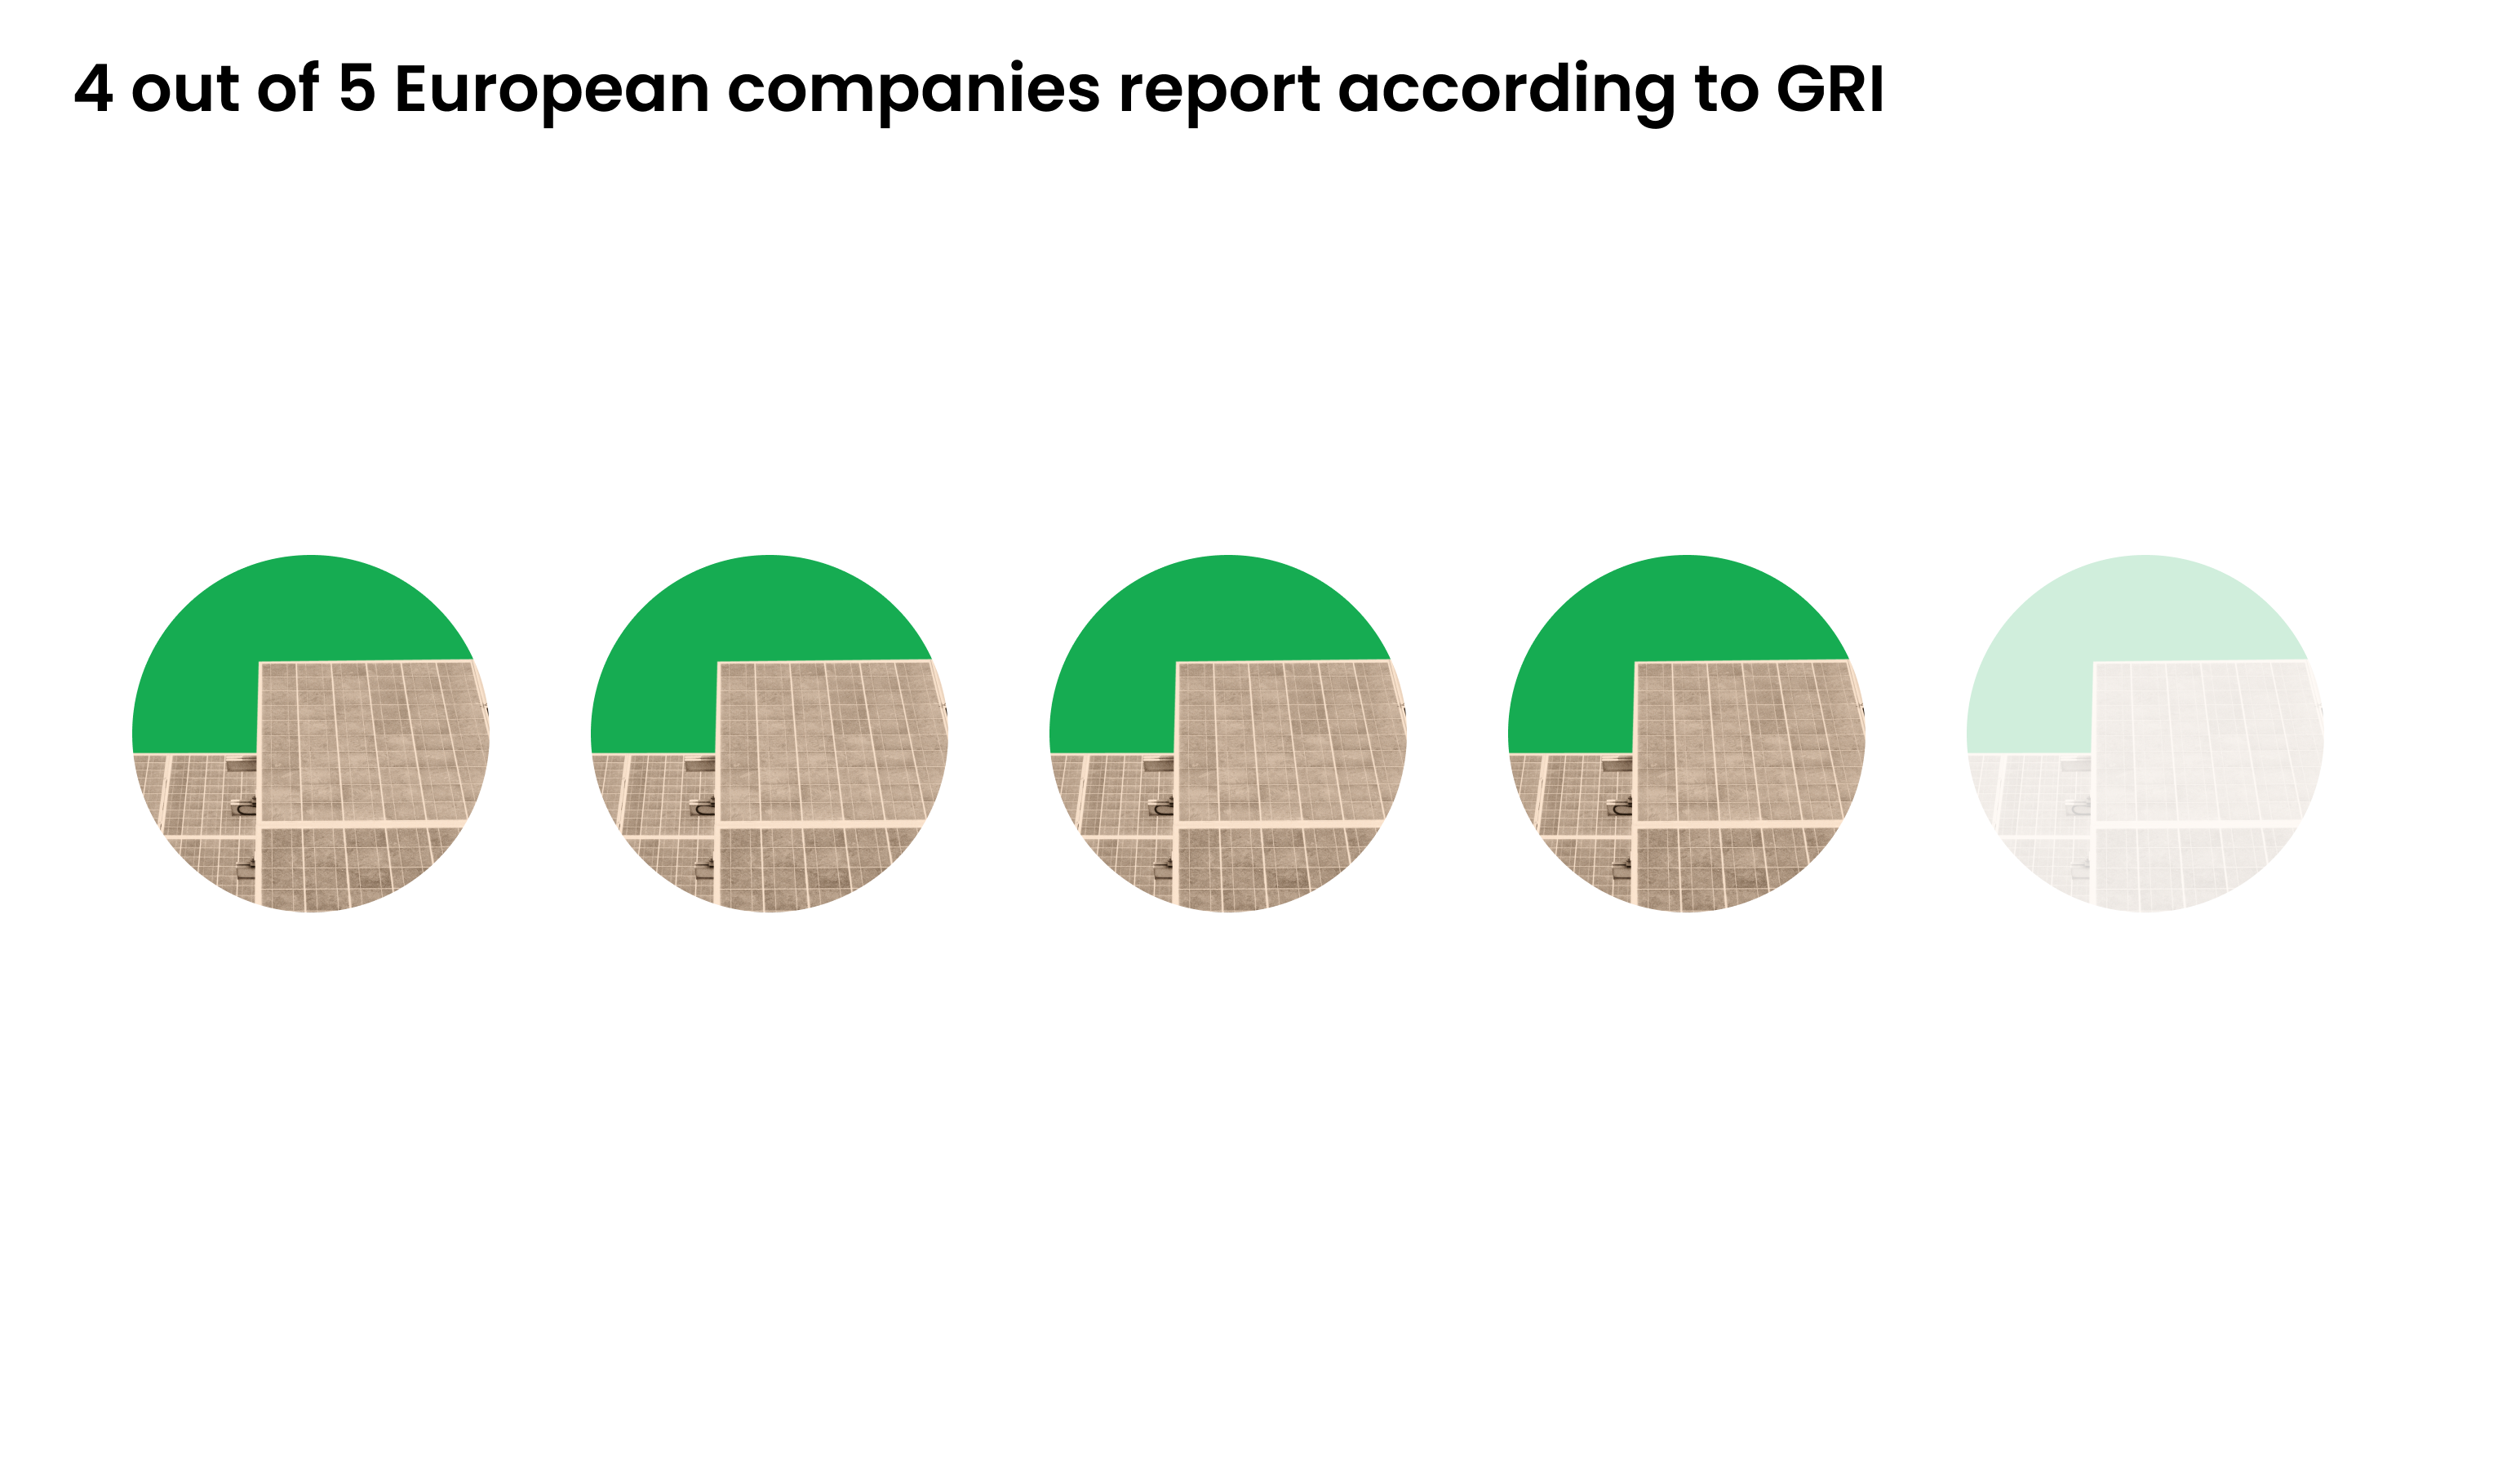 Figure 2. Companies using GRI